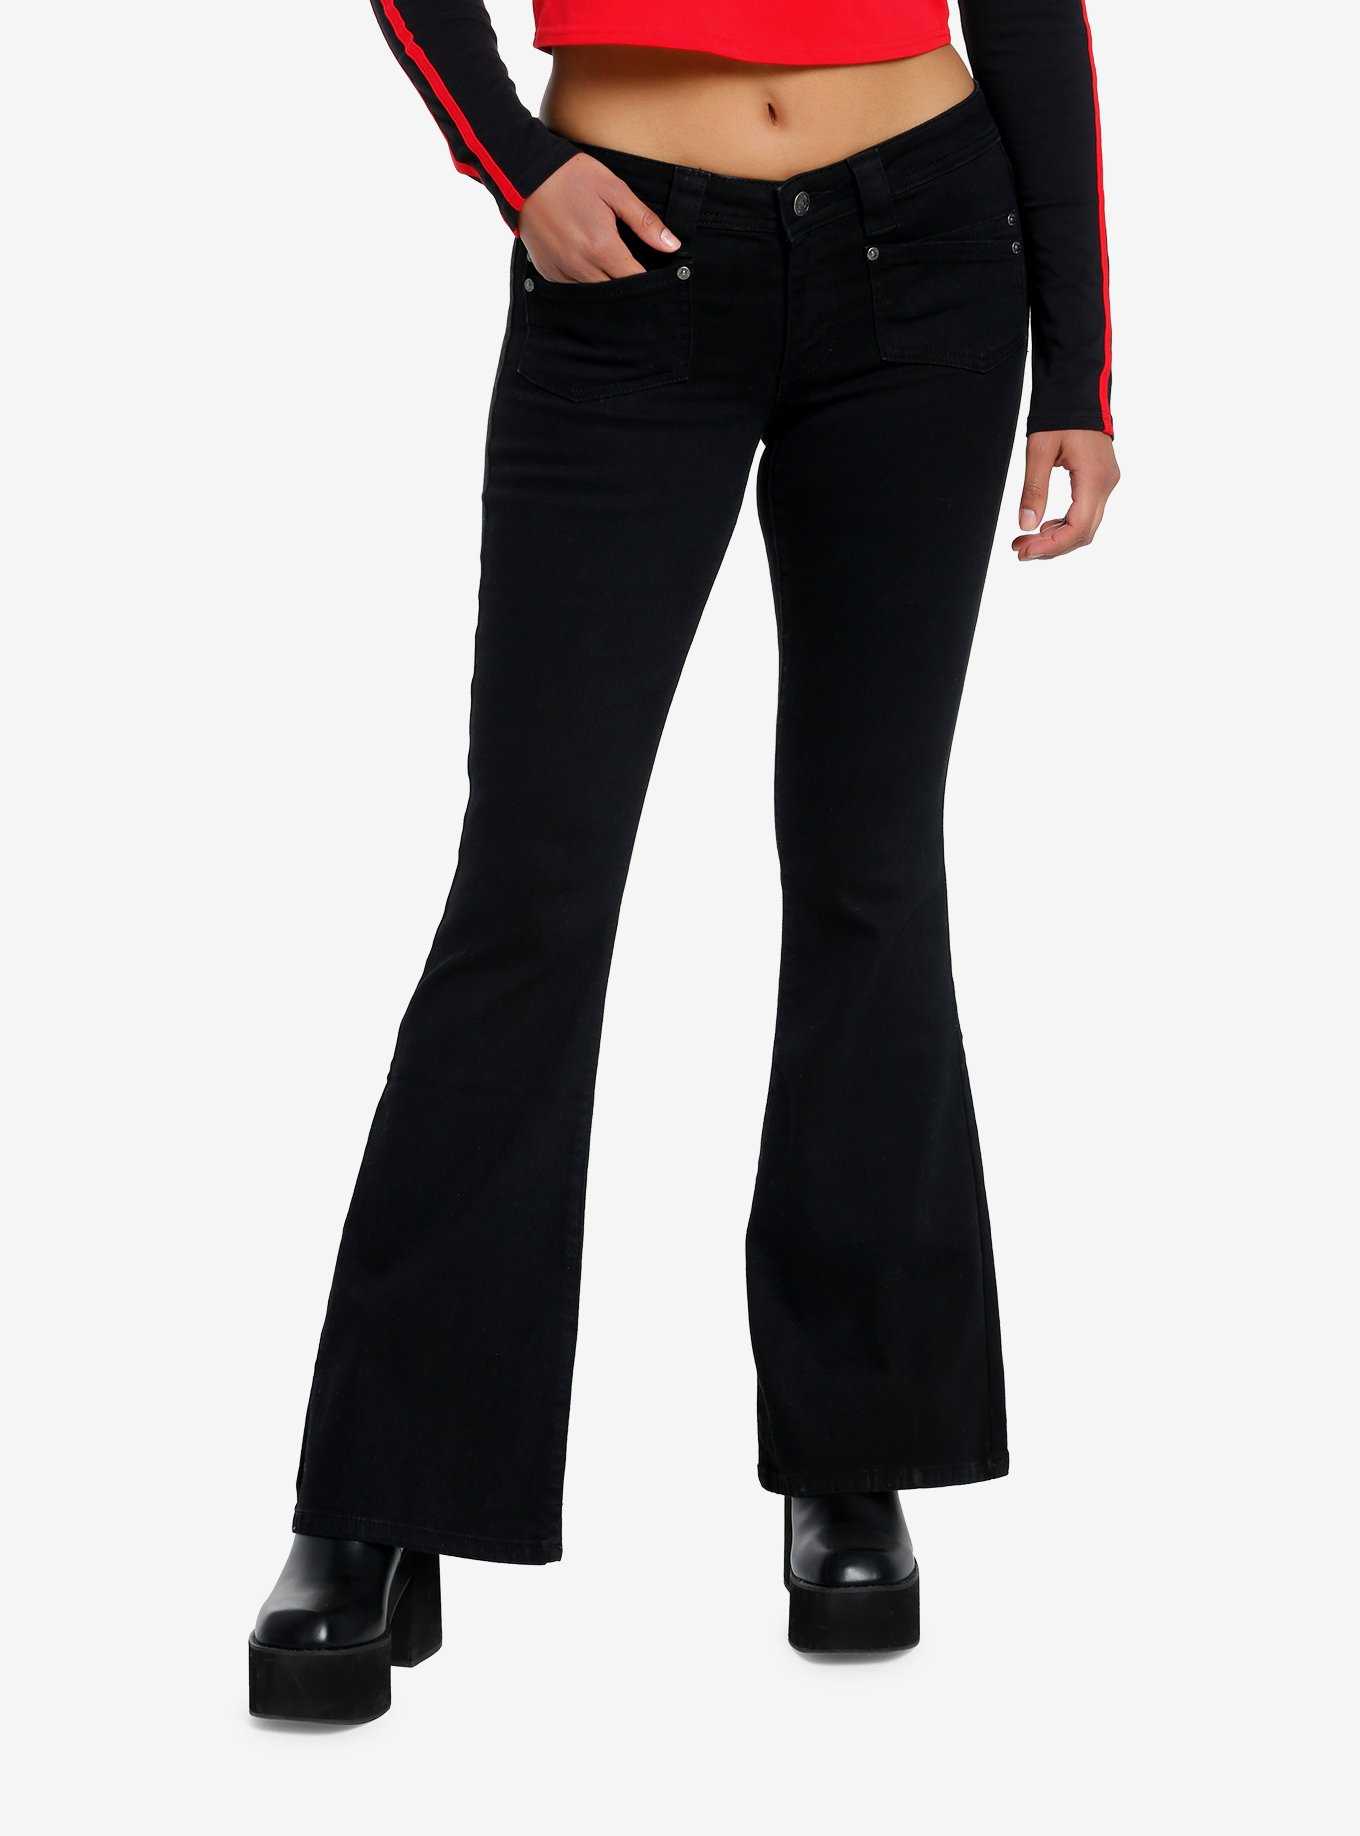 Black & Red Star Suspender Flare Pants Plus Size